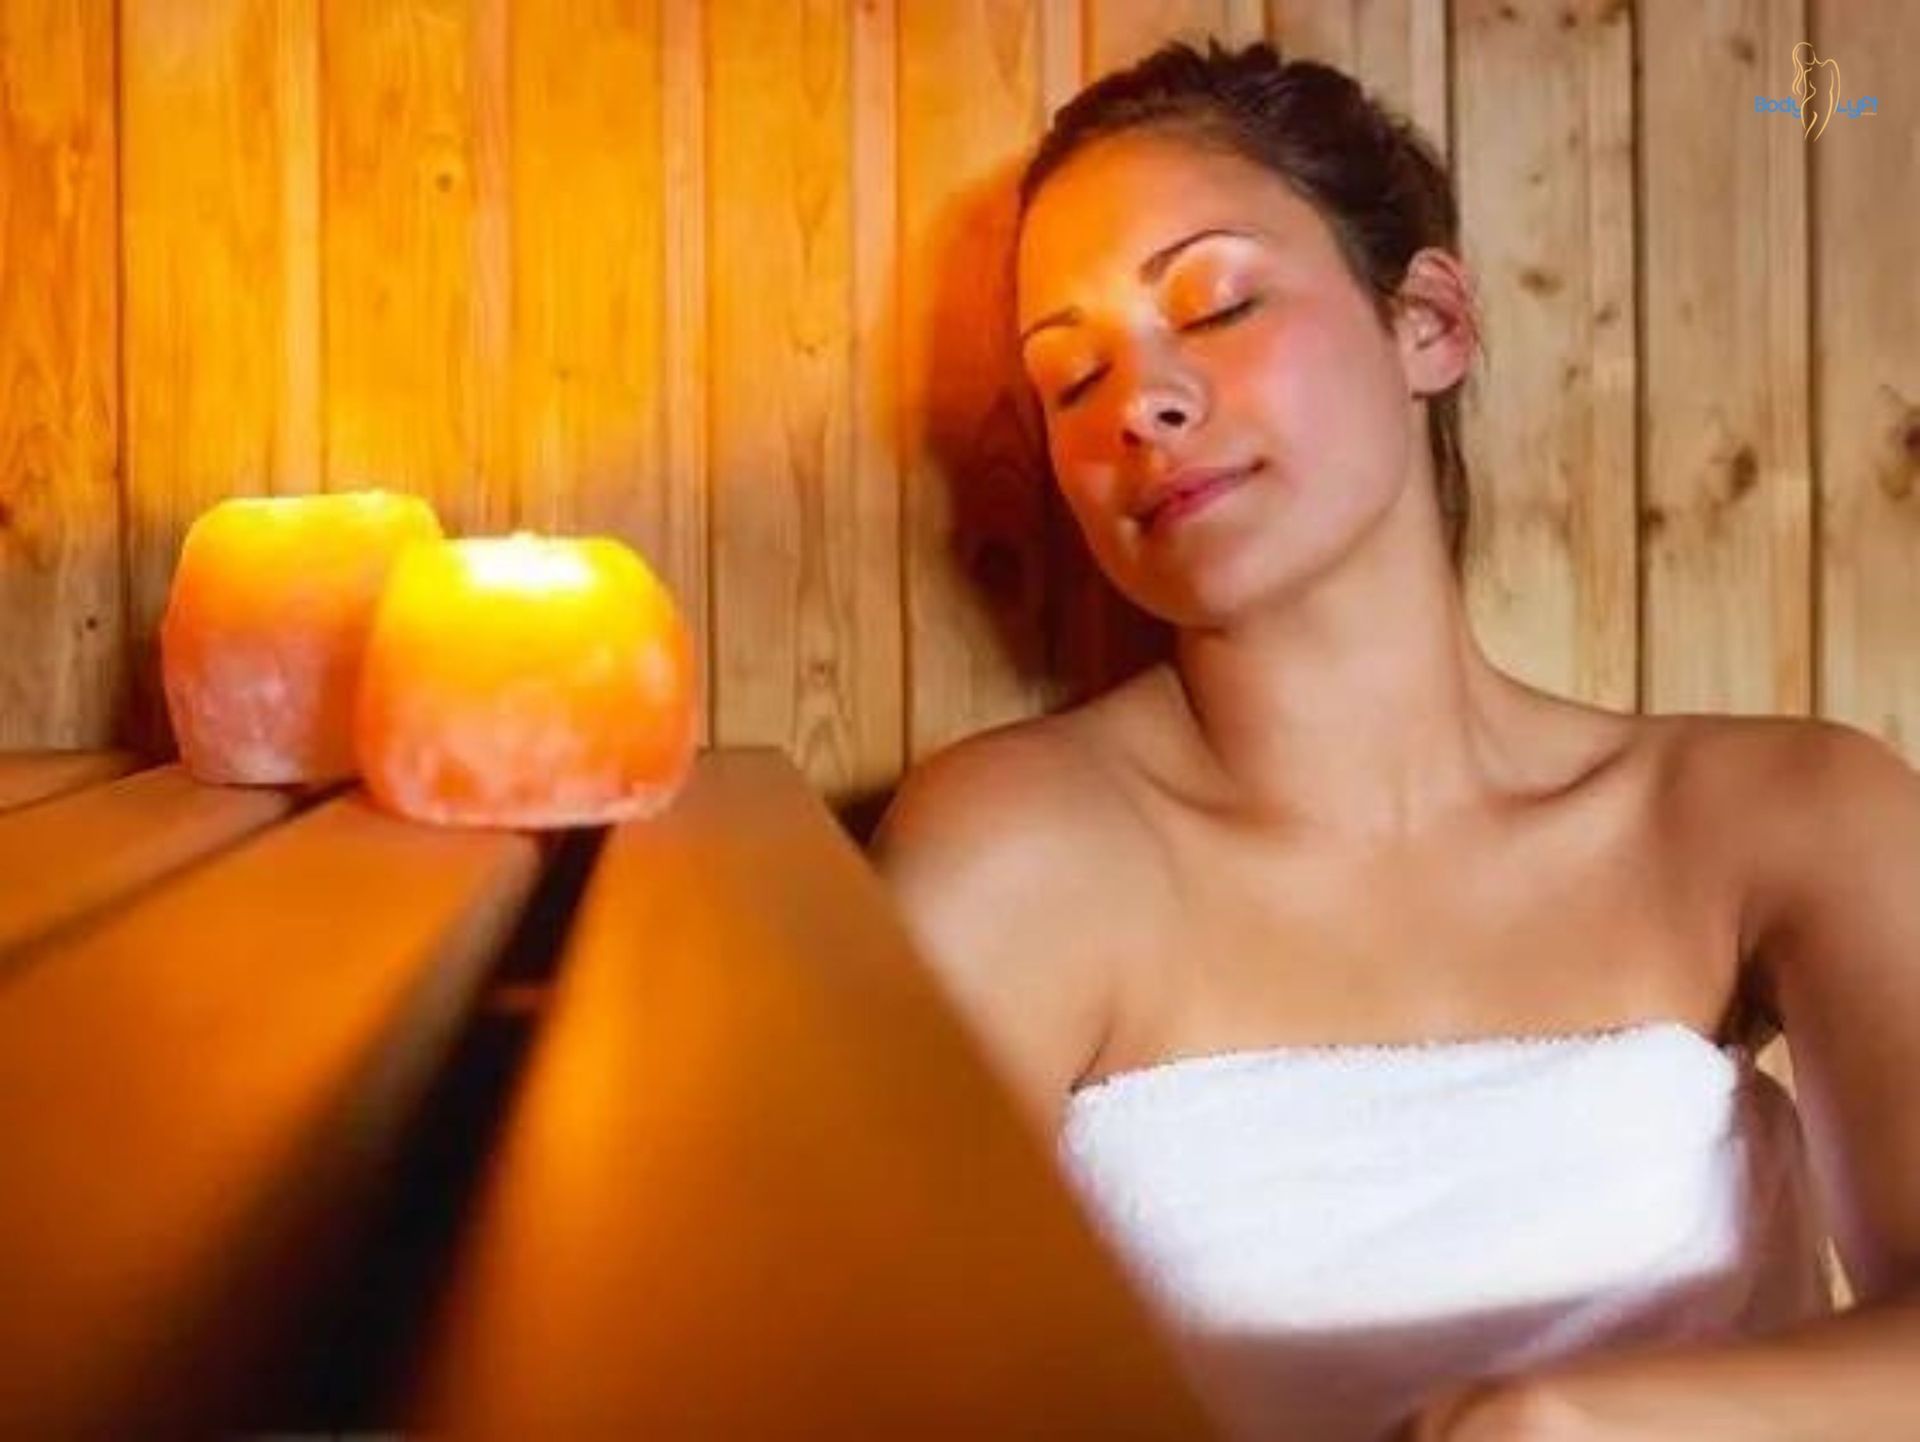 Client enjoying skin purification in infrared sauna